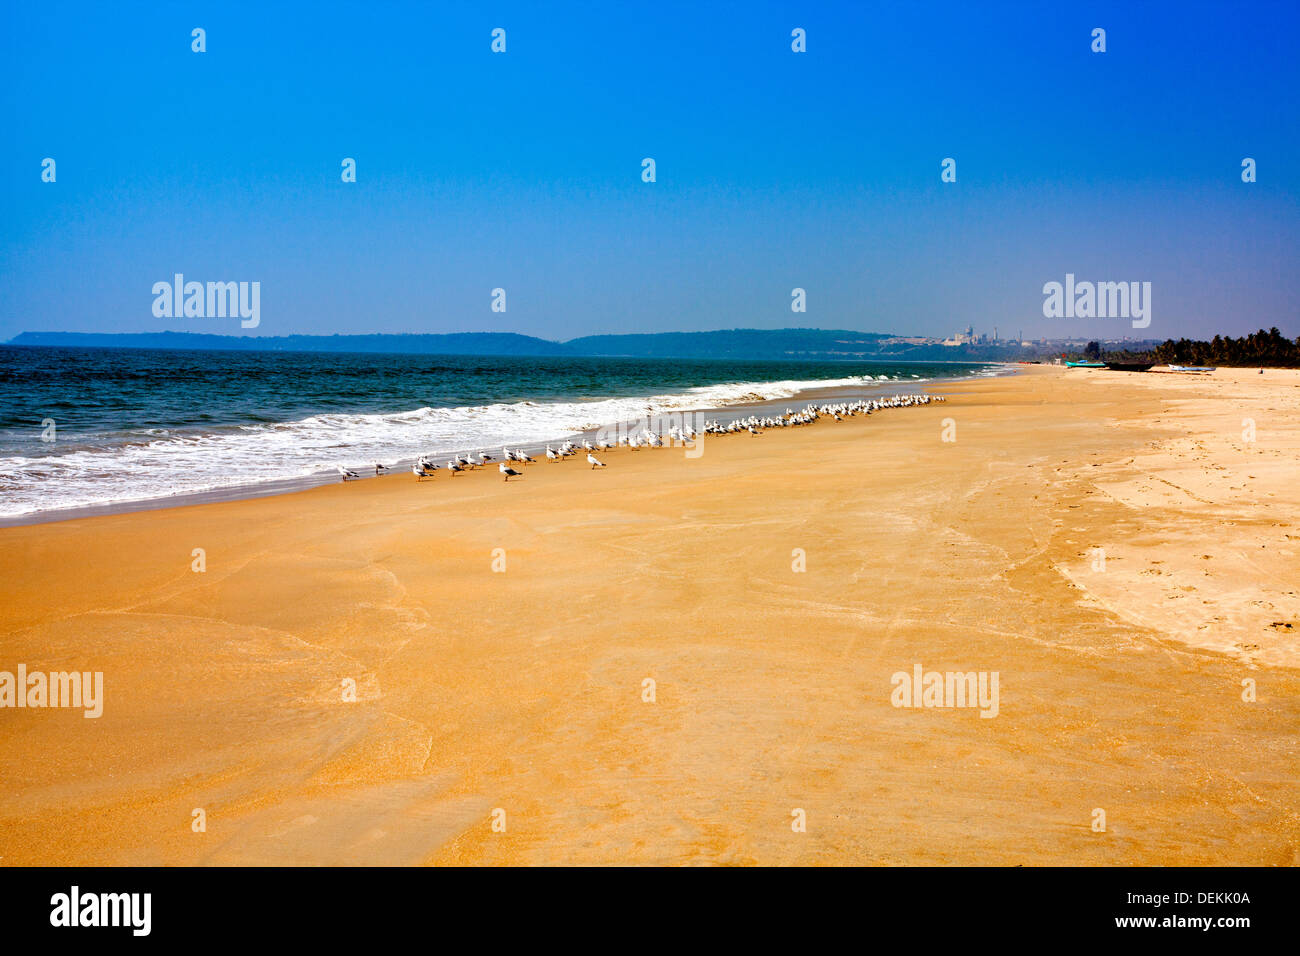 Flock of birds on the beach, Utorda Beach, Majorda, South Goa, Goa, India Stock Photo